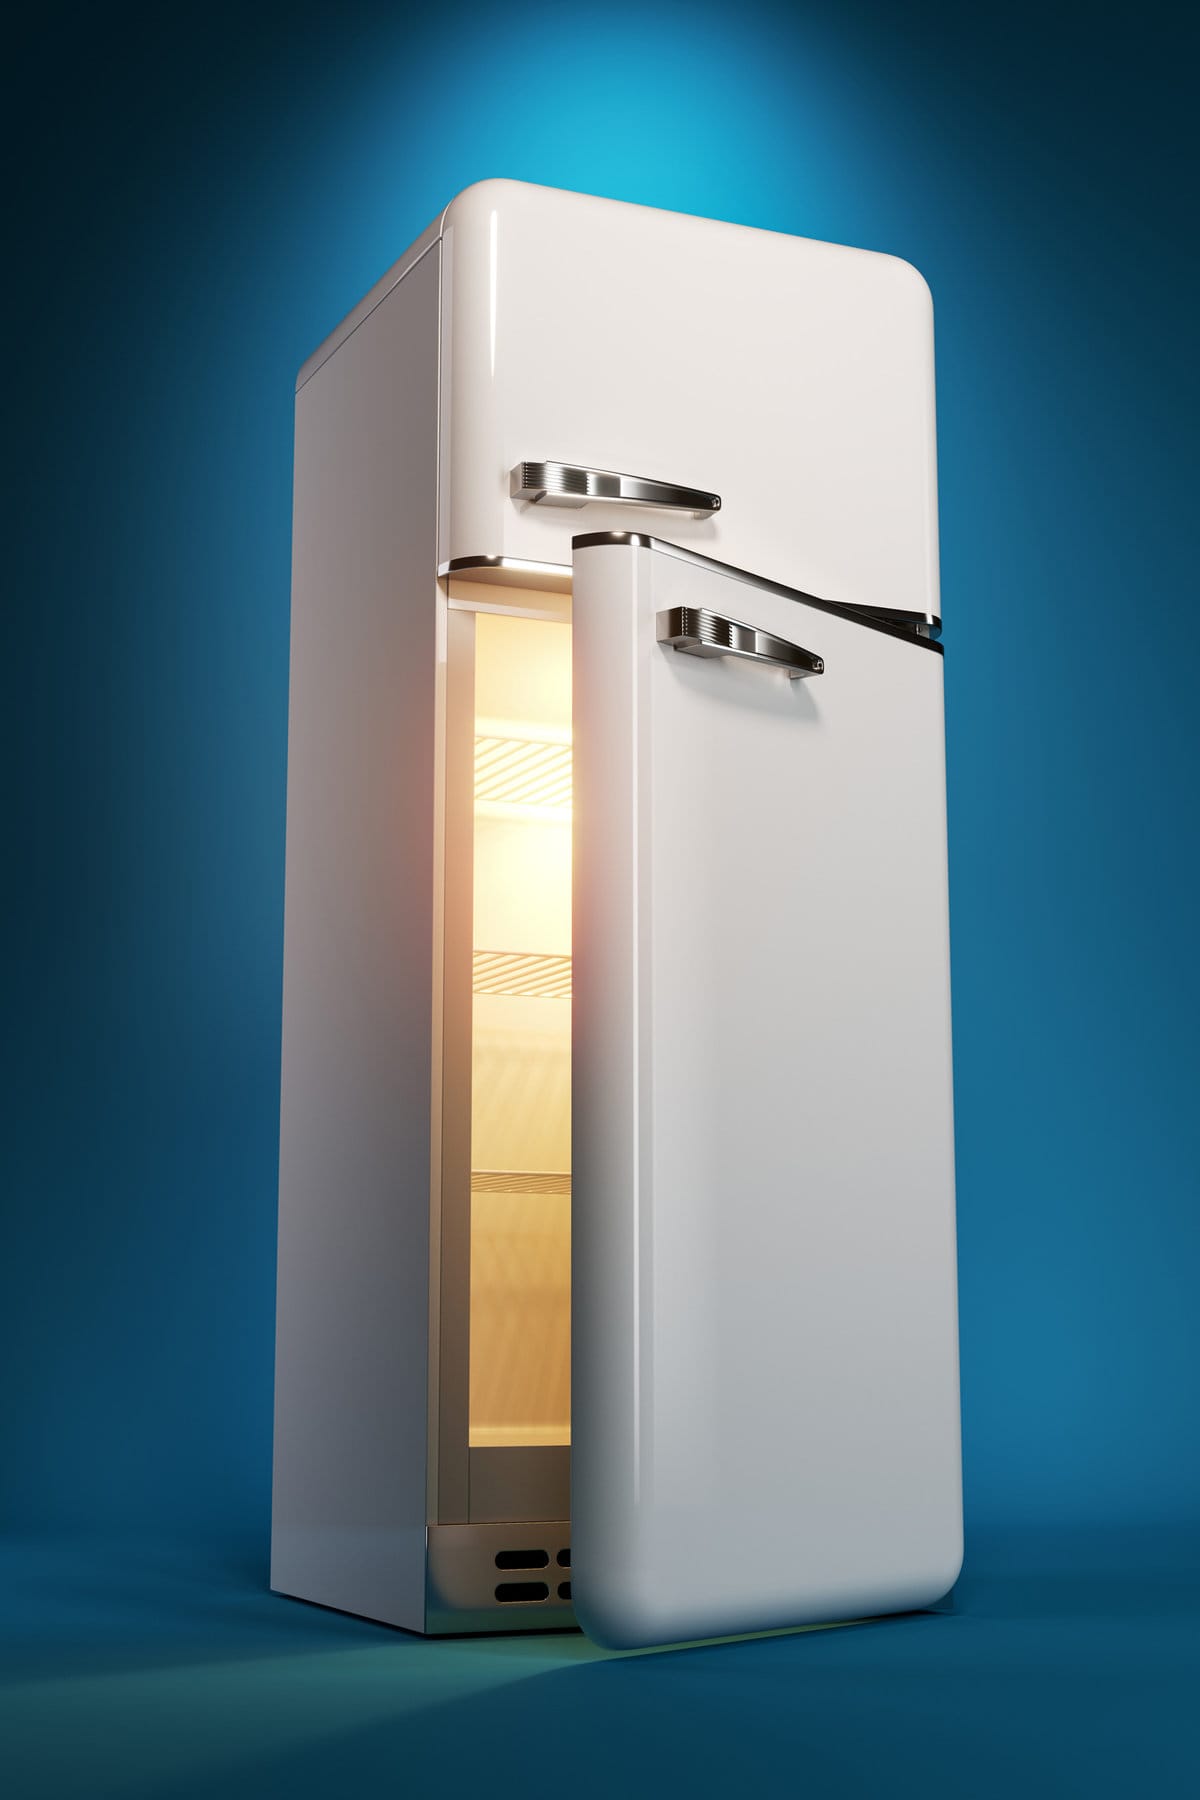 White classic fridge with open door and empty inside. 3d render